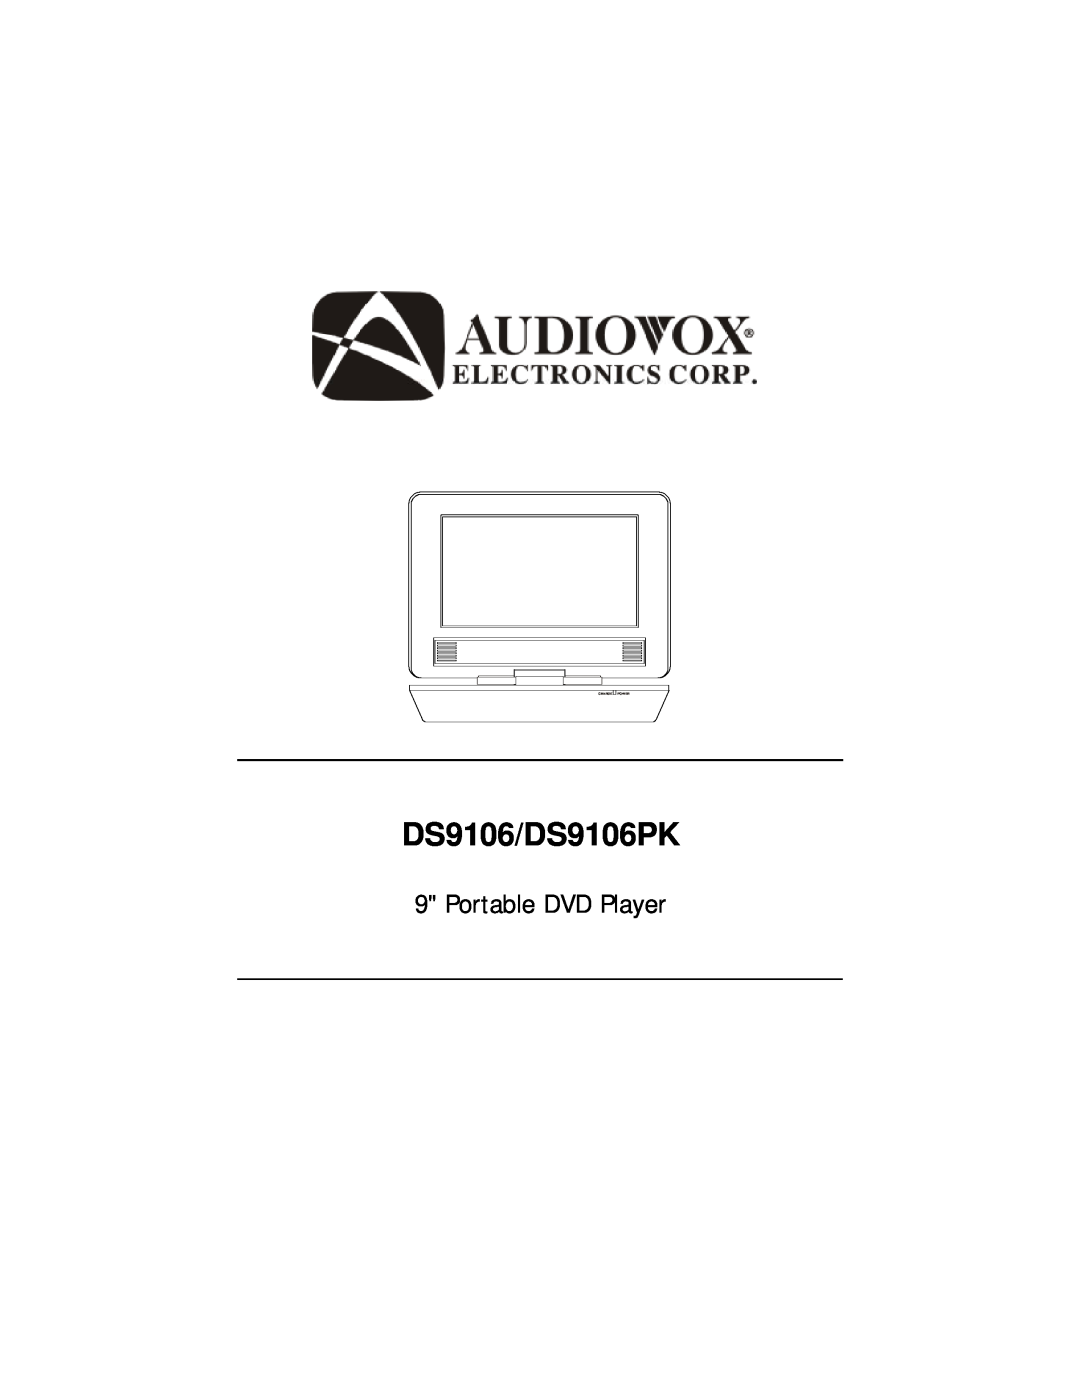 Audiovox manual DS9106/DS9106PK, Portable DVD Player, Cha Rge Pow Er 